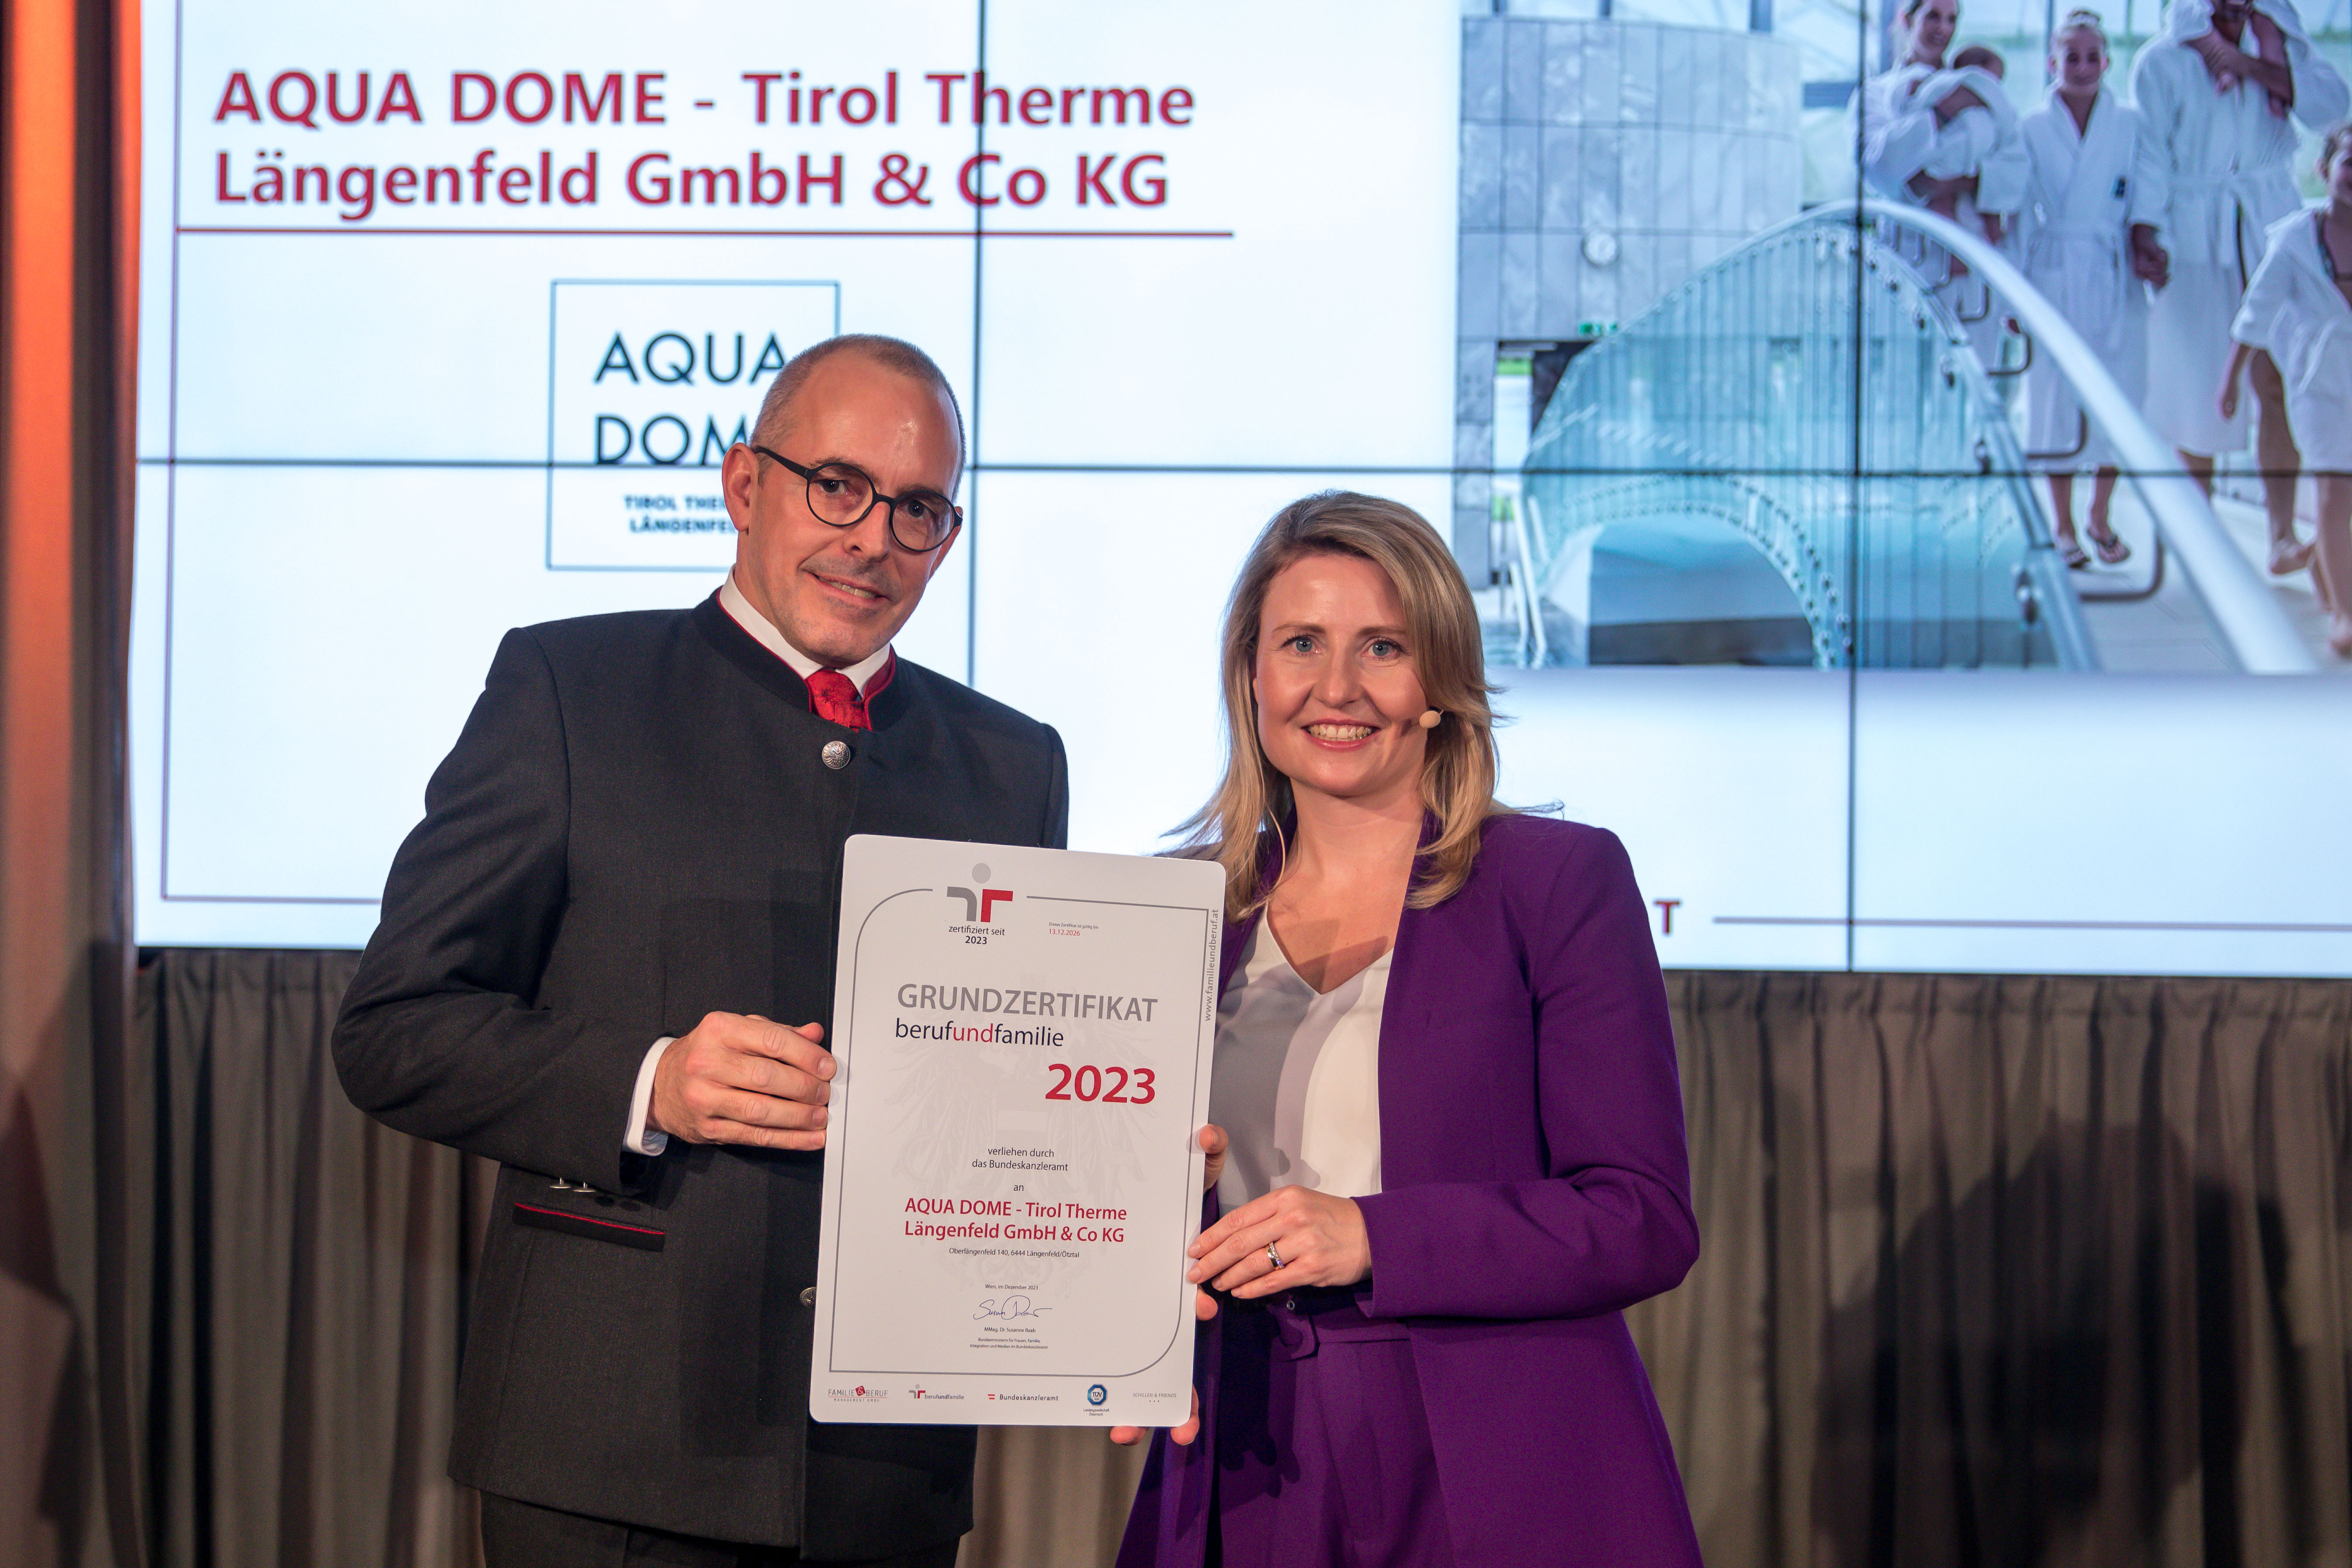 AQUA DOME - Tirol Therme Längenfeld GmbH & Co KG